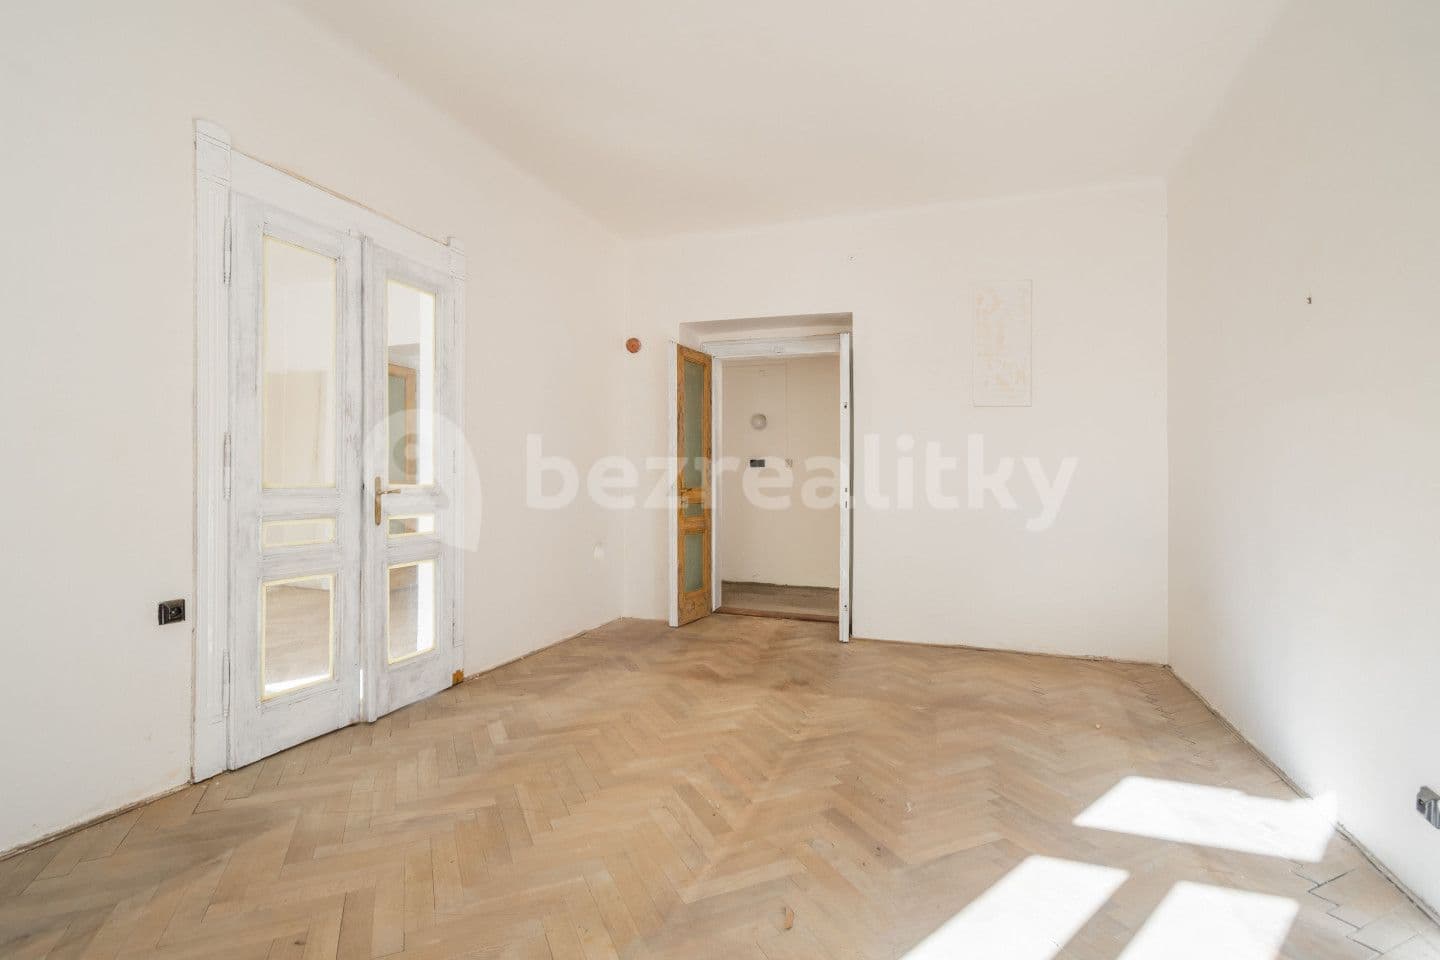 2 bedroom flat for sale, 76 m², Kováků, Prague, Prague